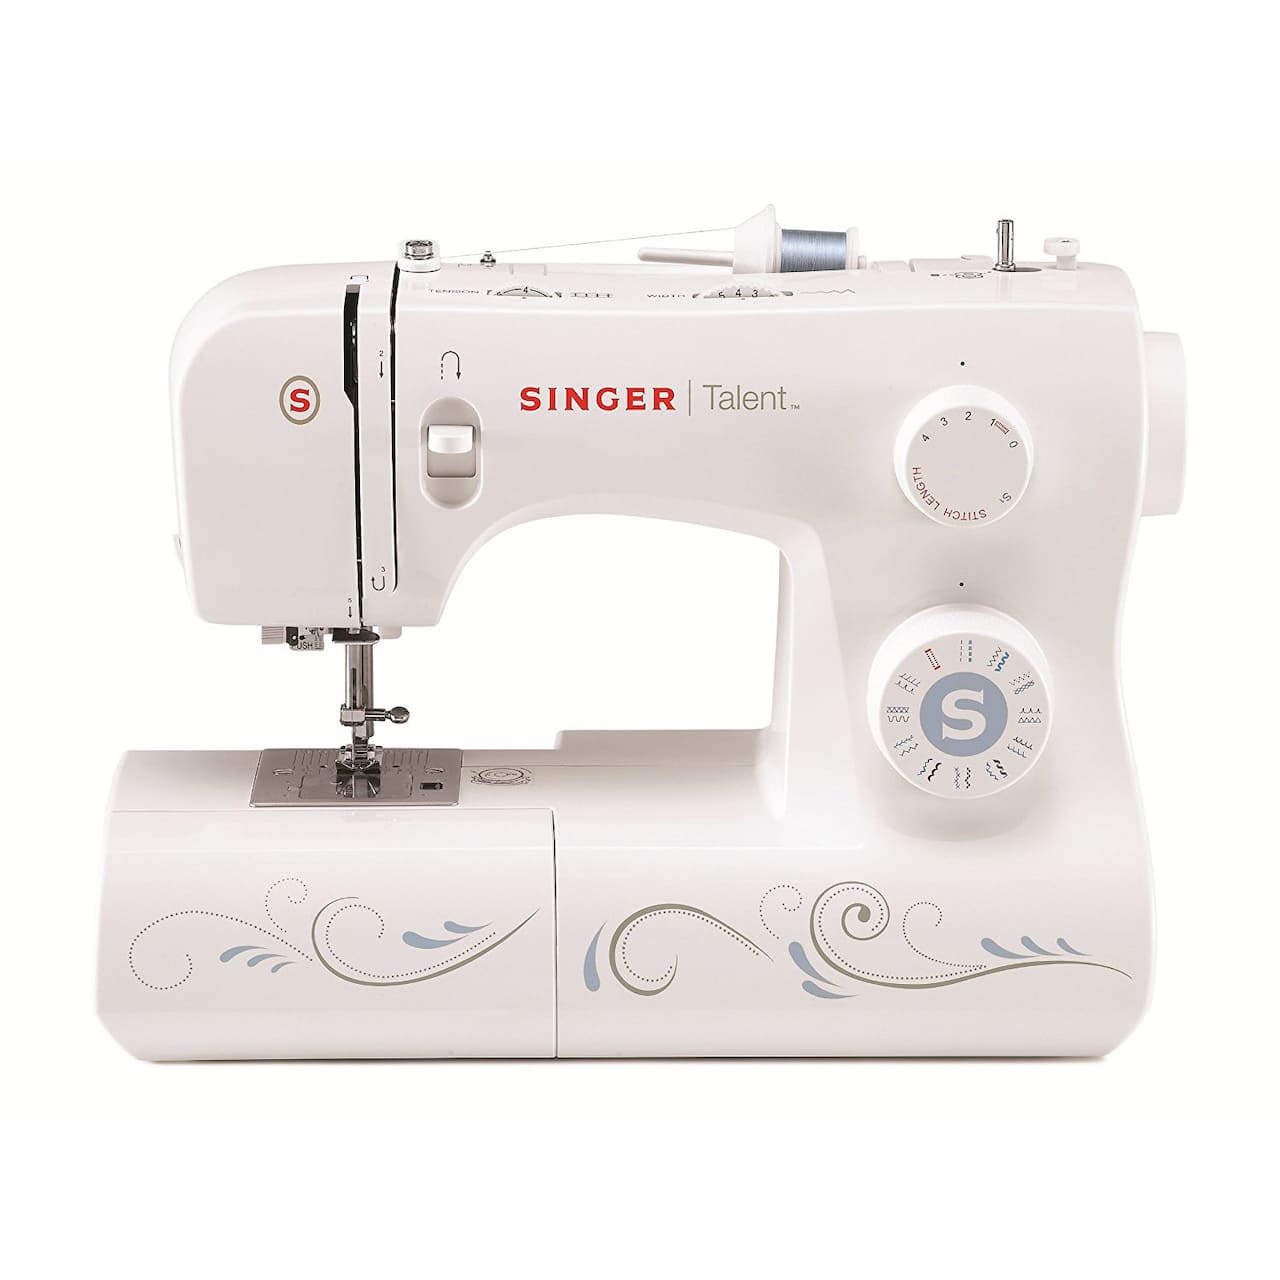 SINGER Talent 3323 Sewing Machine